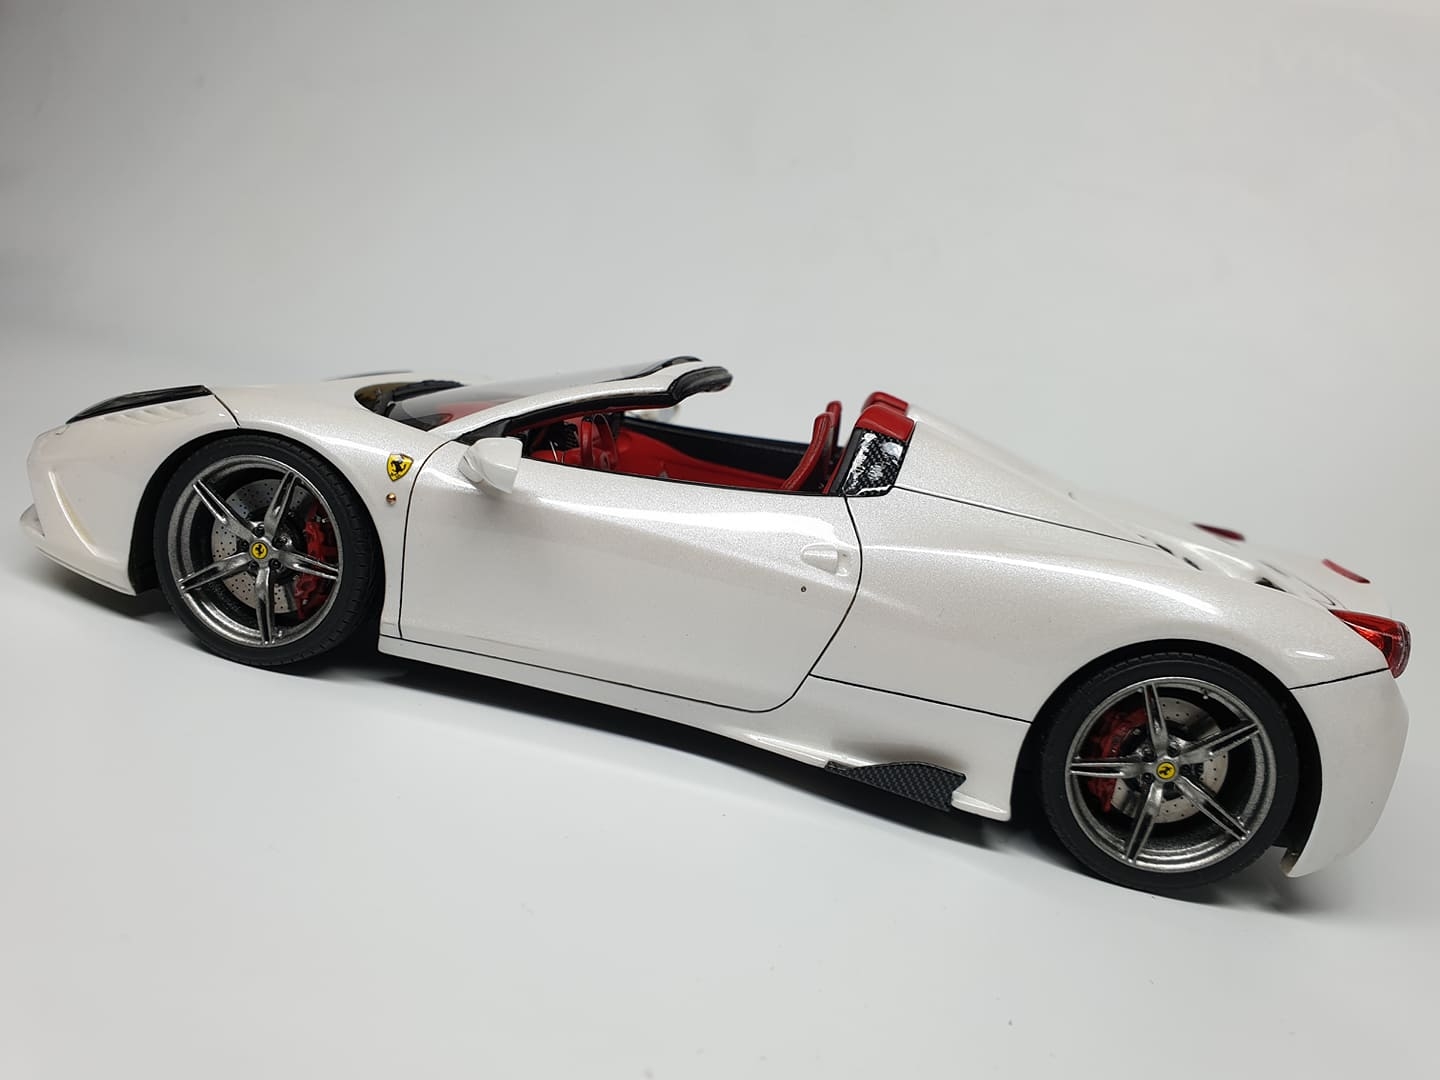 1/24 Ferrari 458 speciale alpha model，1/24 scale model cars，resin car model kits，Aftermarket Model Parts，aftermarket resin model car parts